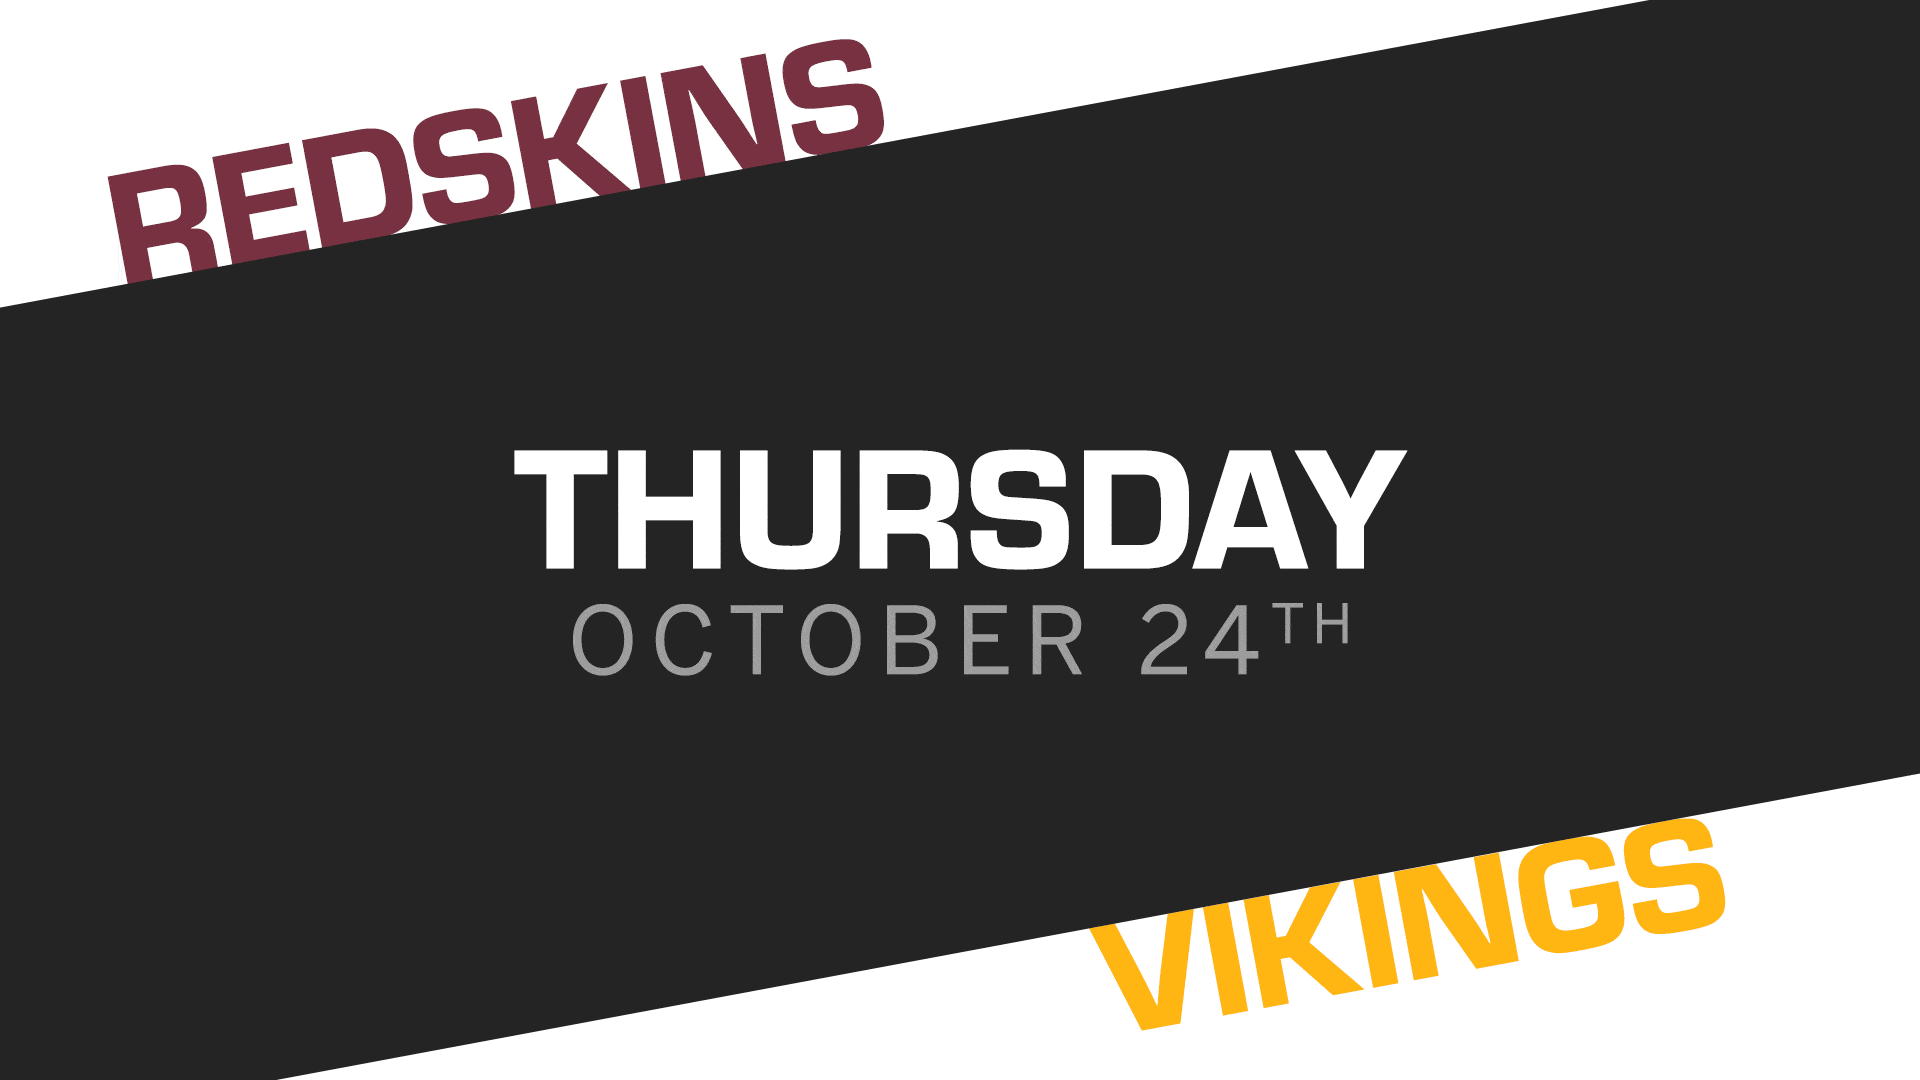 REDSKINS vs VIKINGS TONIGHT: Thursday Night Football